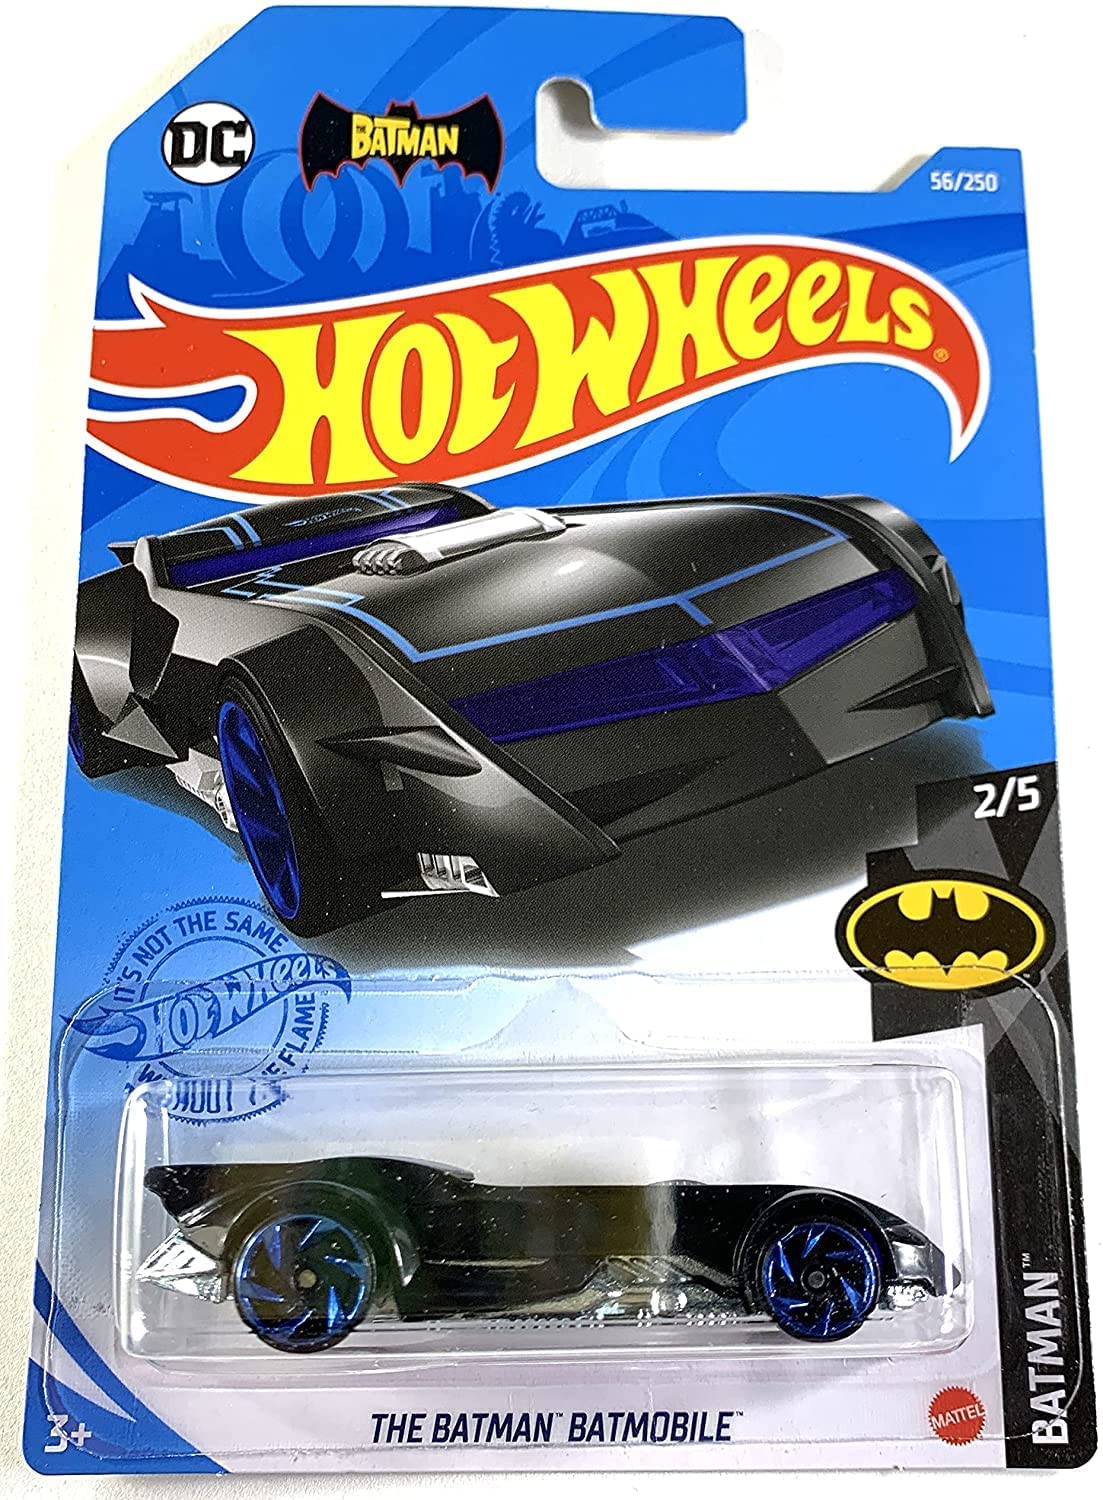 Original Die Cast Hot Wheels The Batman Batmobile, Batman 2/5 [Blue & Black]